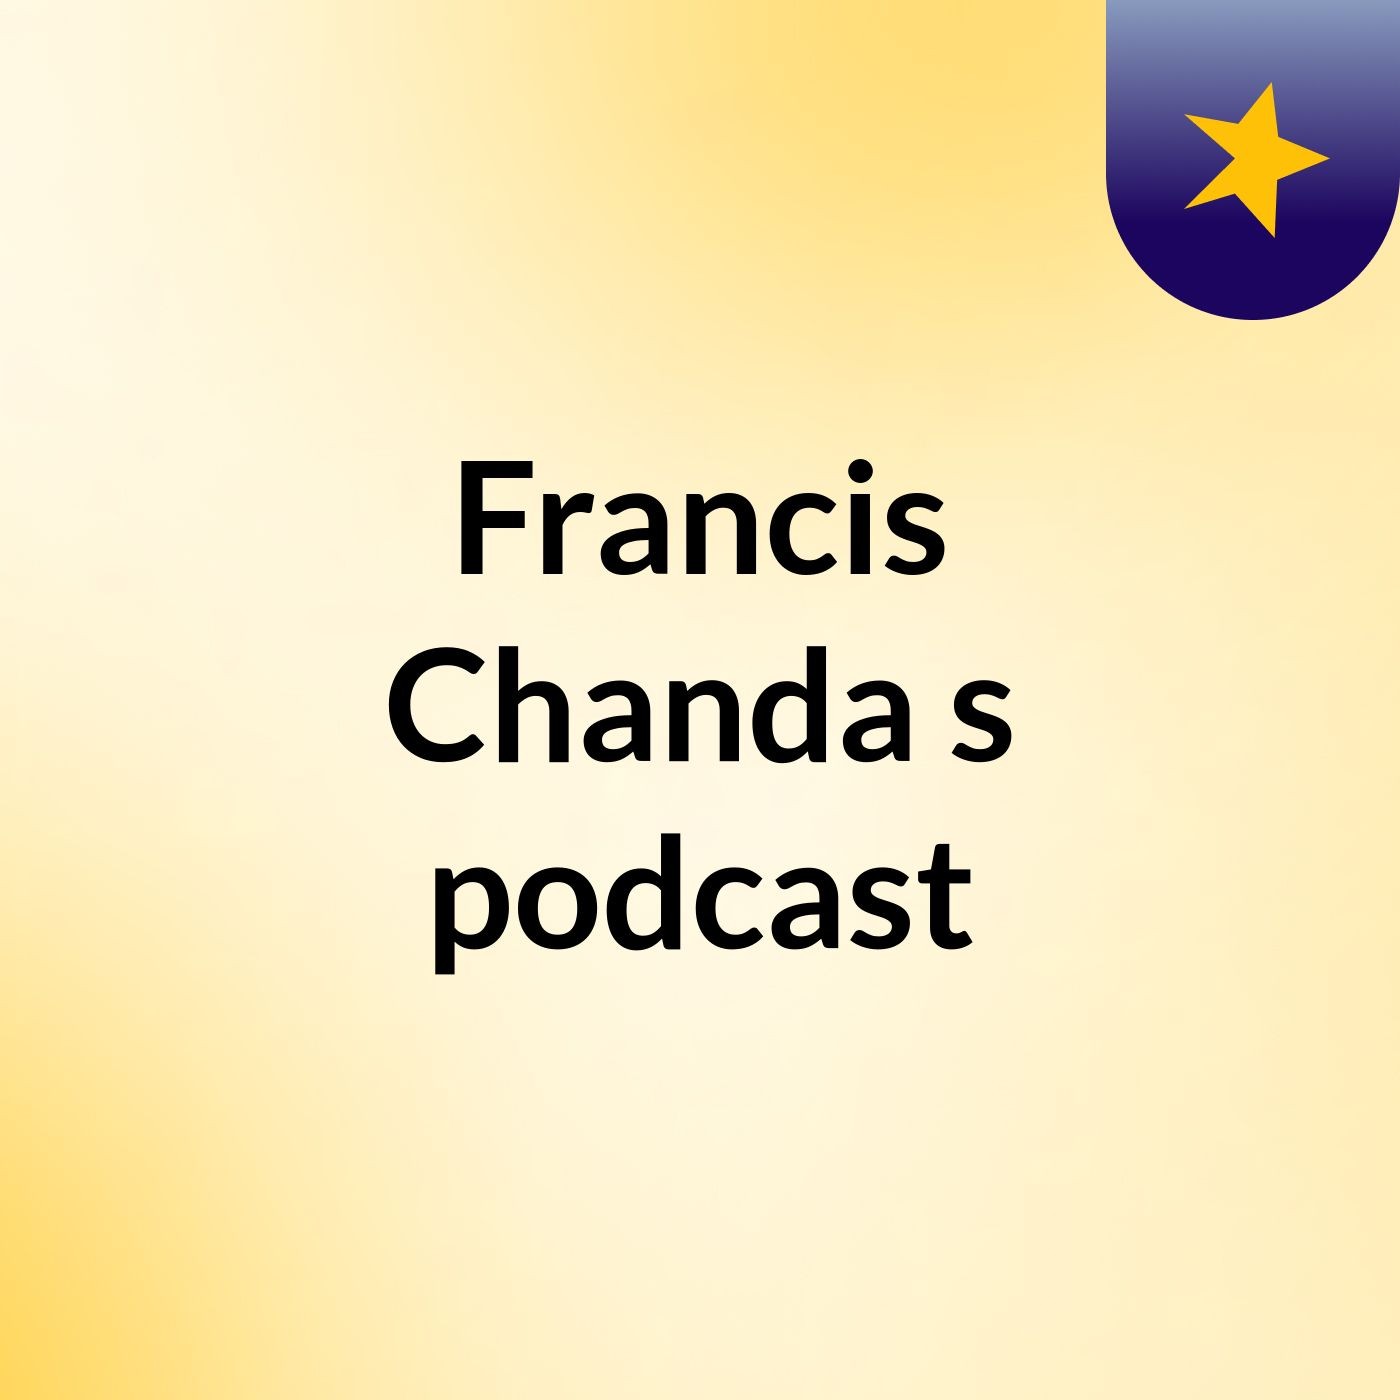 Francis Chanda's podcast